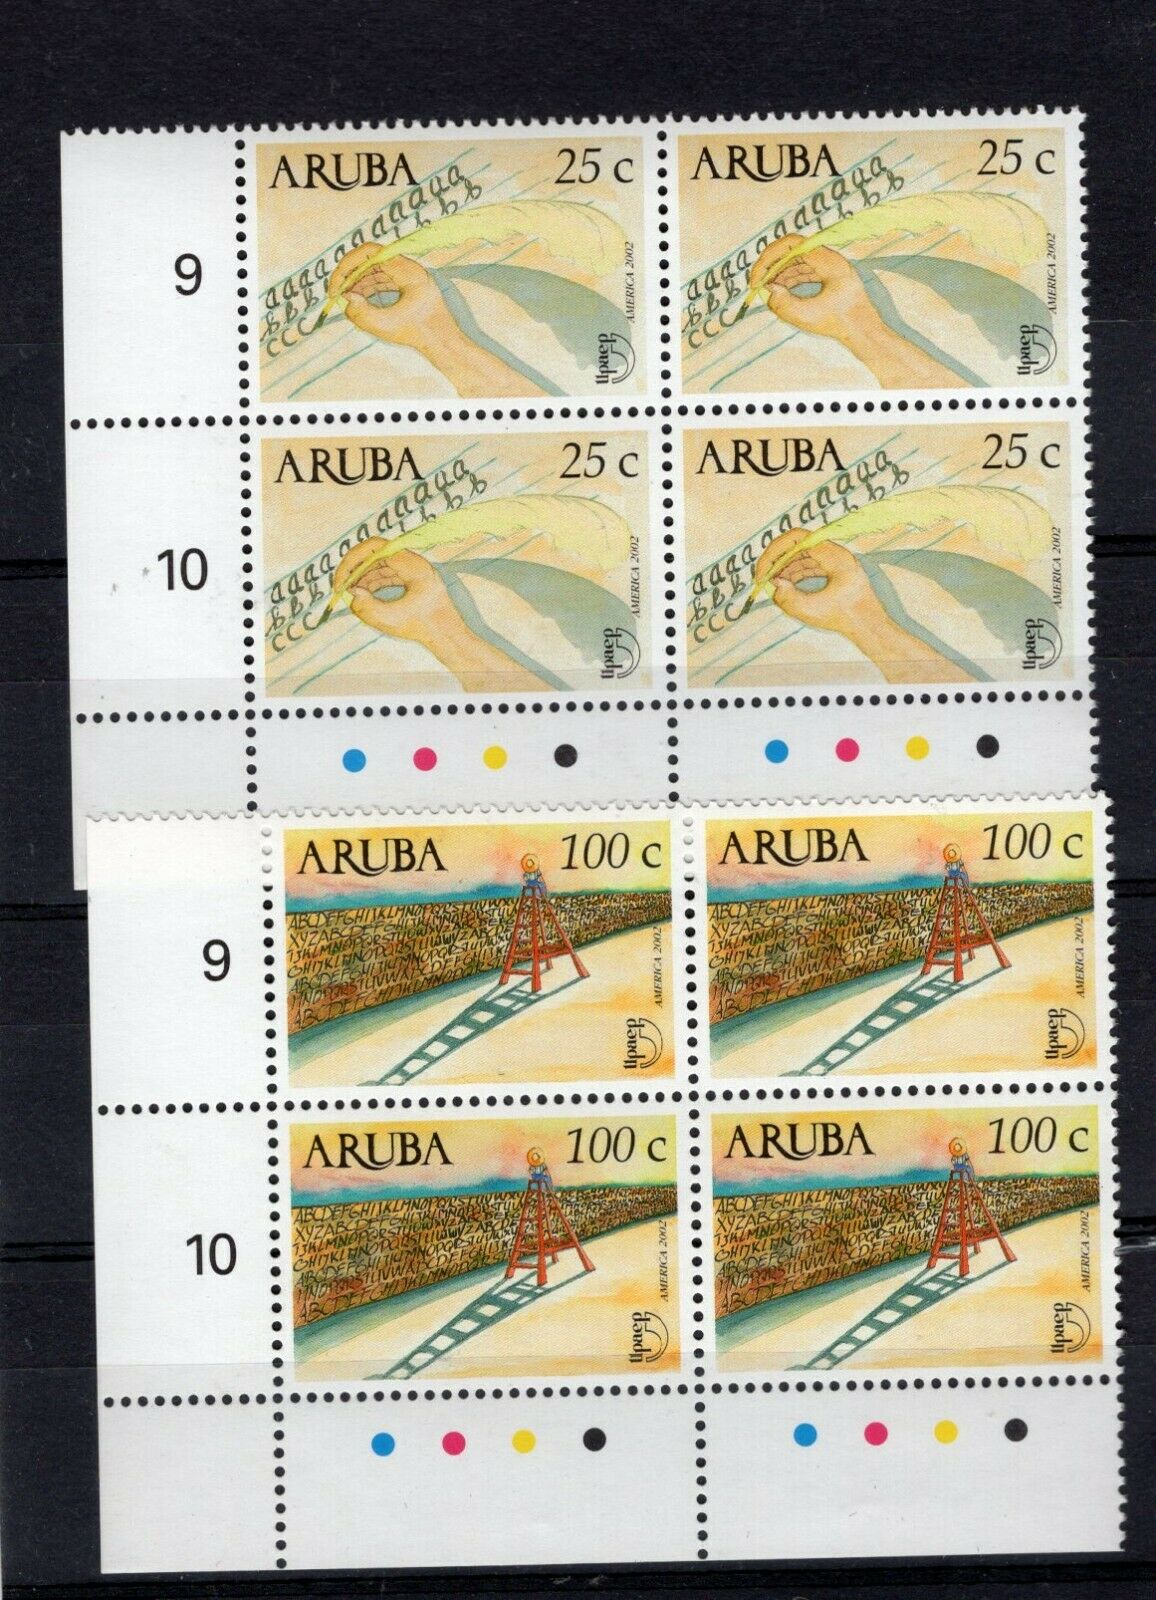 UPAEP - ARUBA, 2002, BLOCK, MNH, VF